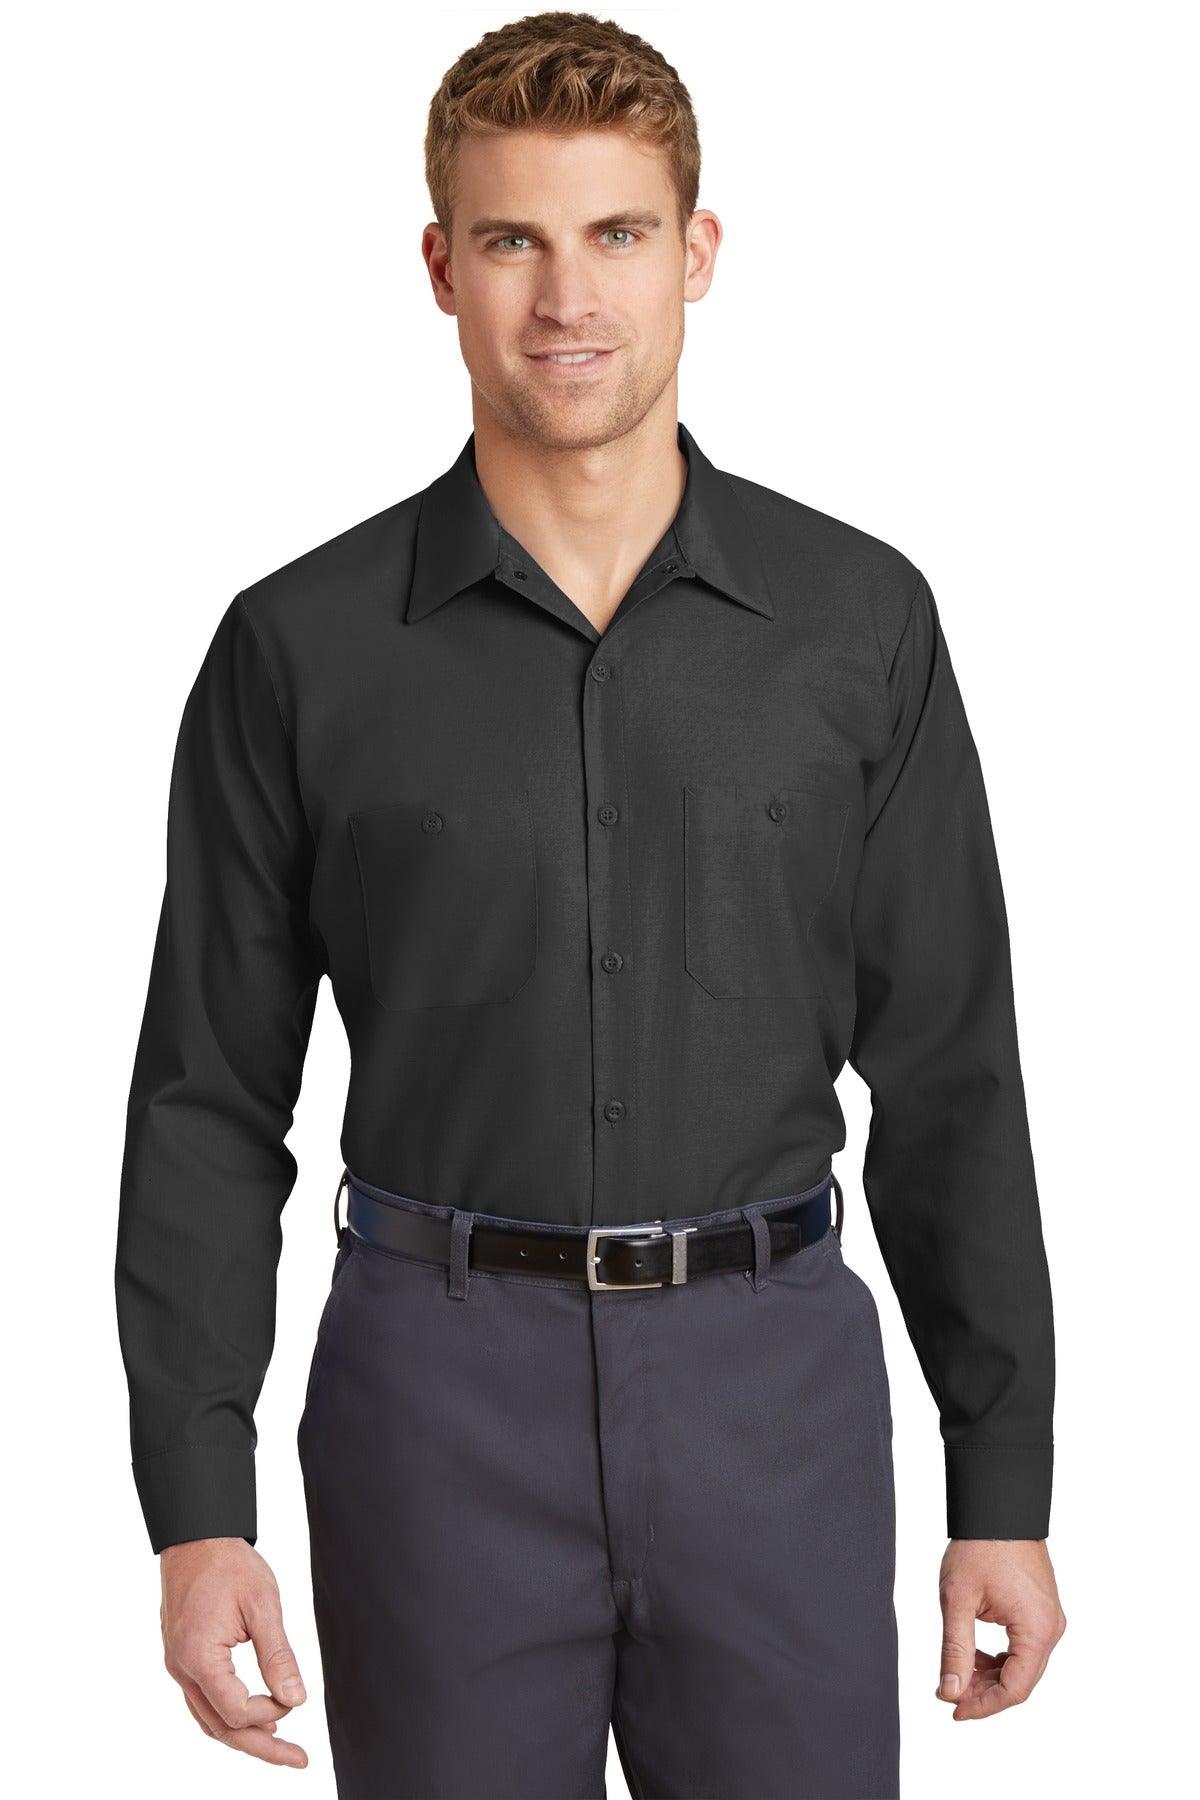 Red Kap Long Size, Long Sleeve Industrial Work Shirt. SP14LONG - Dresses Max